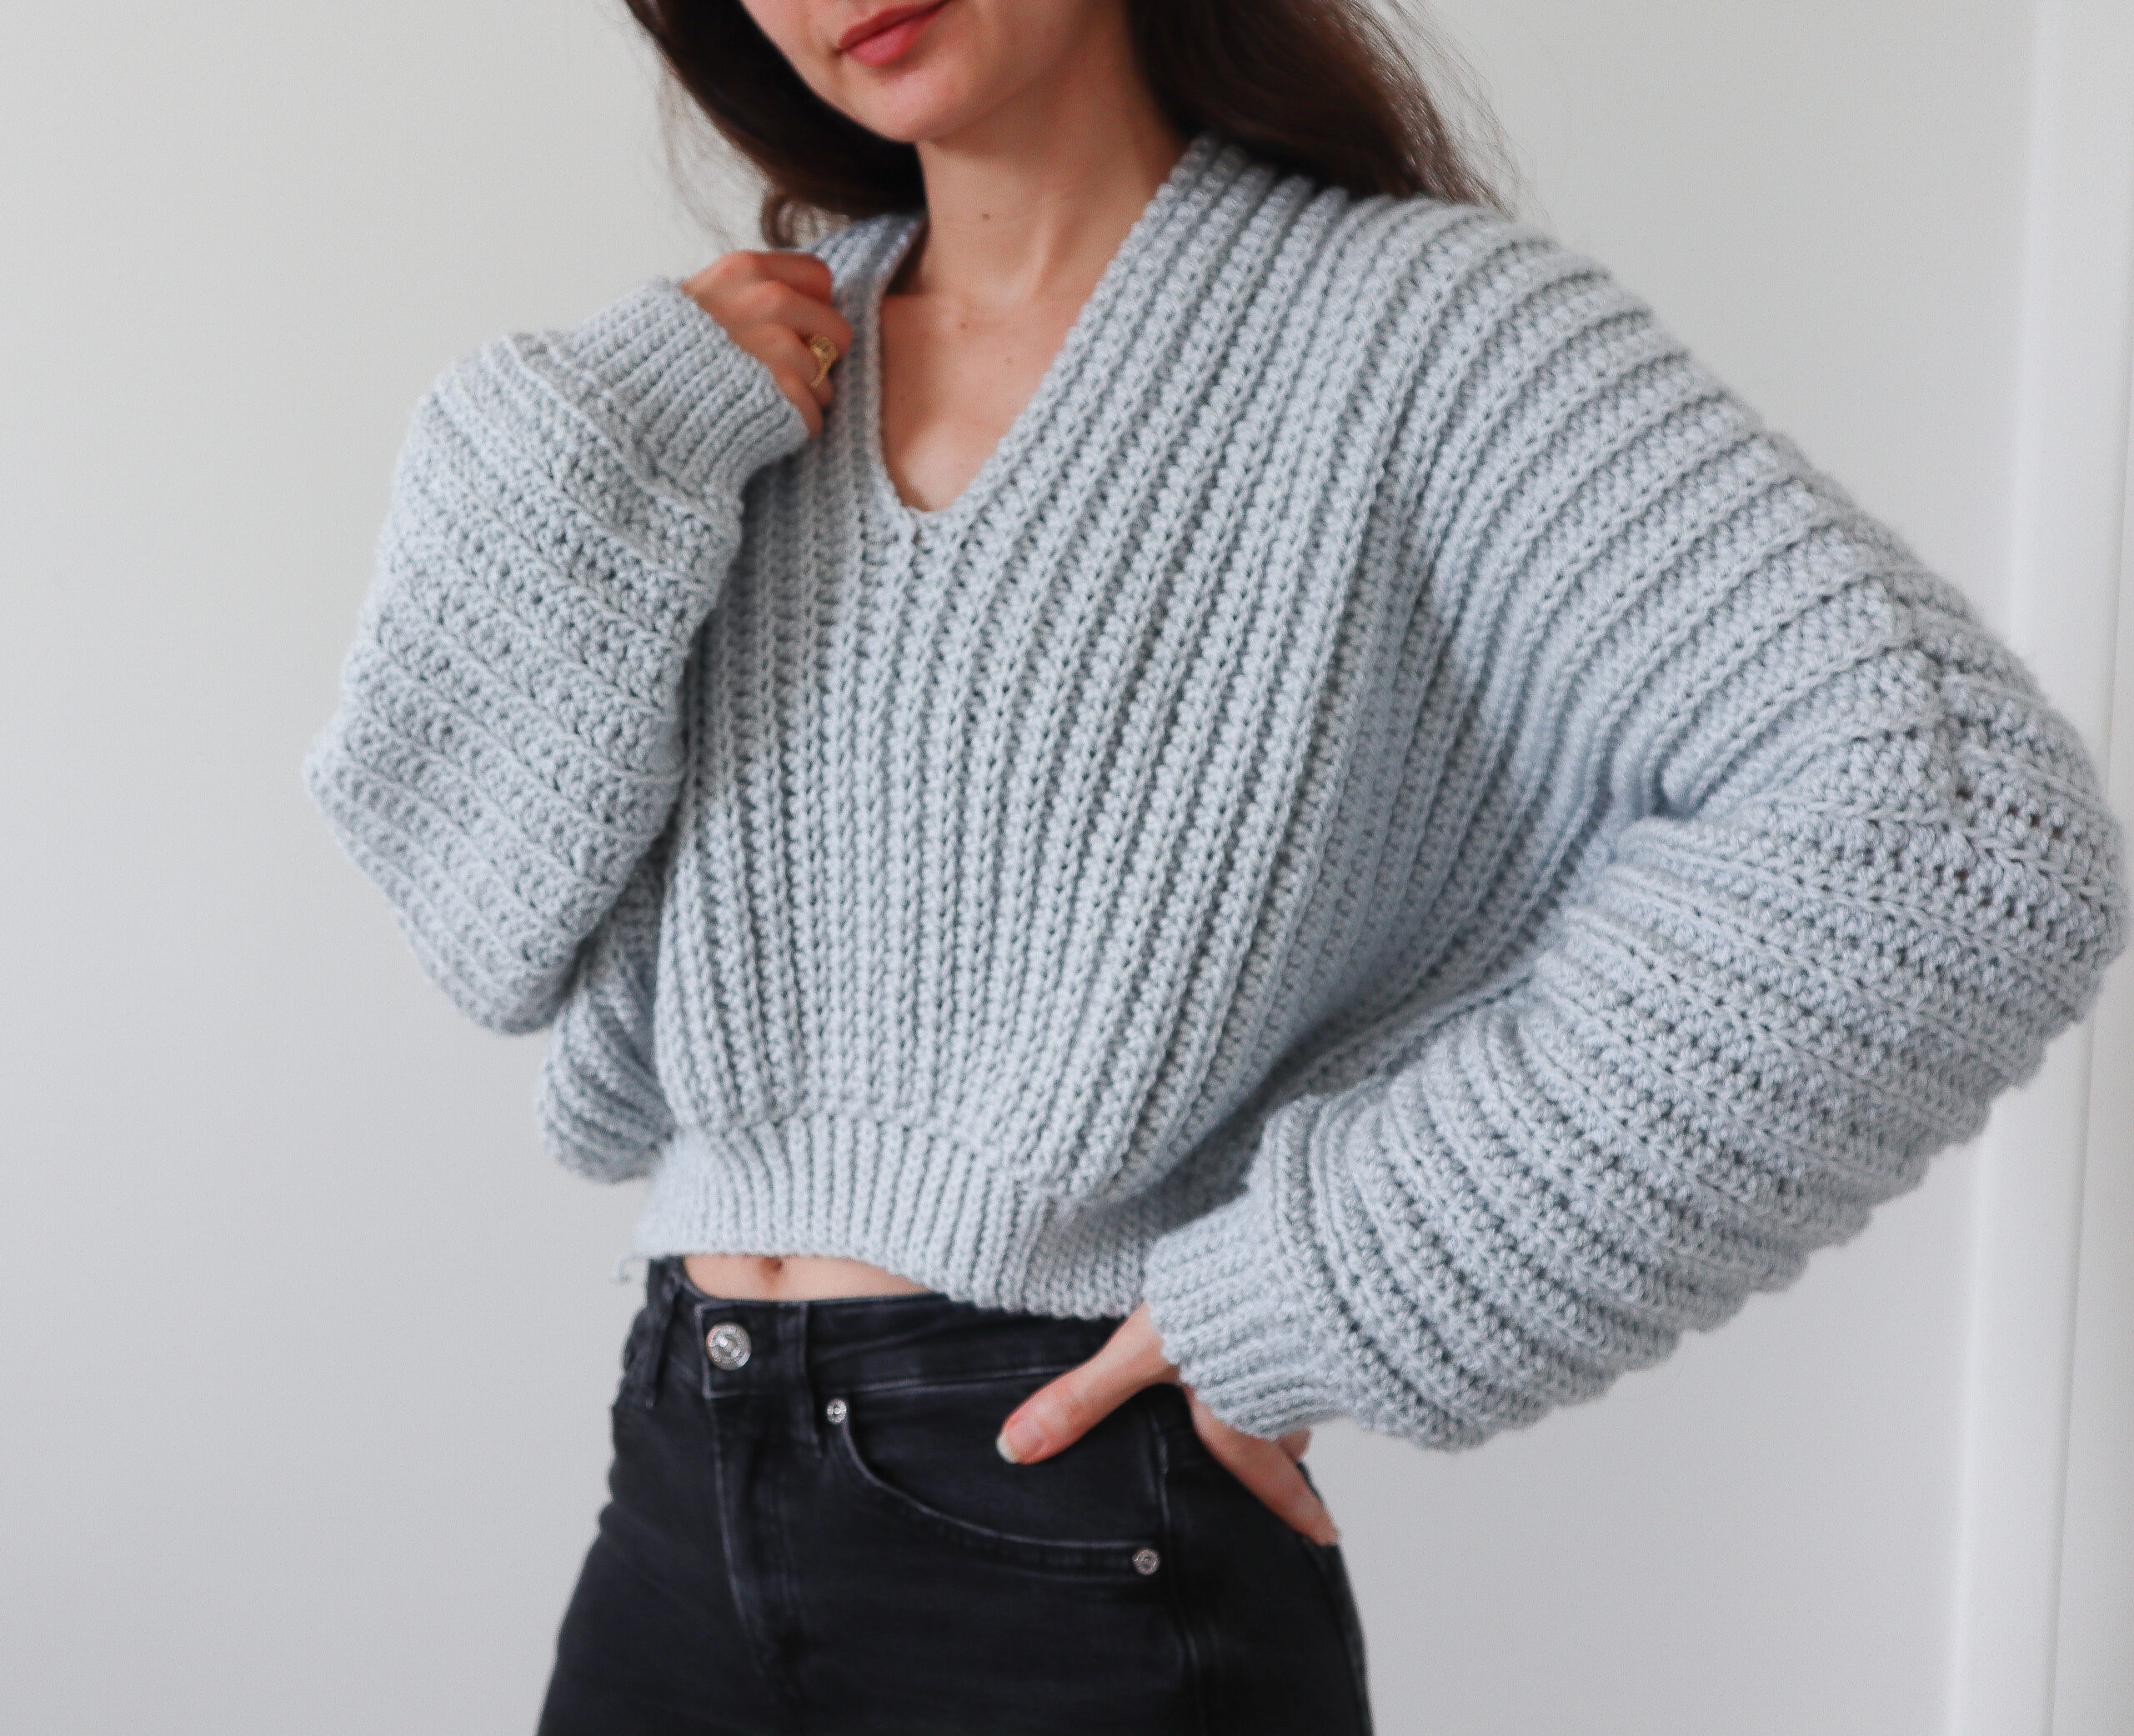 The Better Sweater – DK Weight Crochet Sweater Pattern – The Snugglery